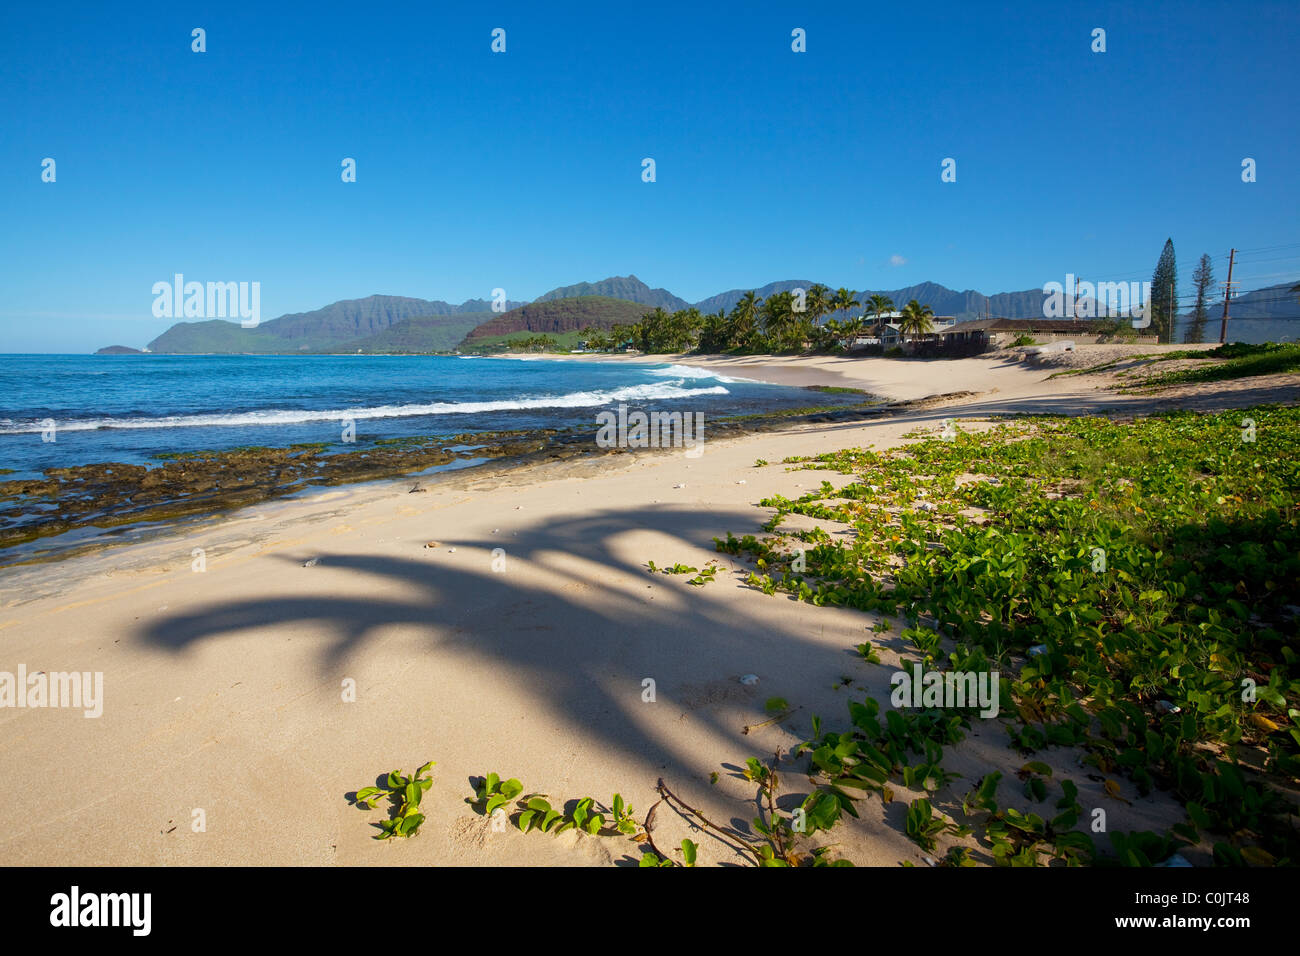 Ulehawa; costa sottovento; Oahu; Hawaii; Spiaggia; spiagge Foto Stock